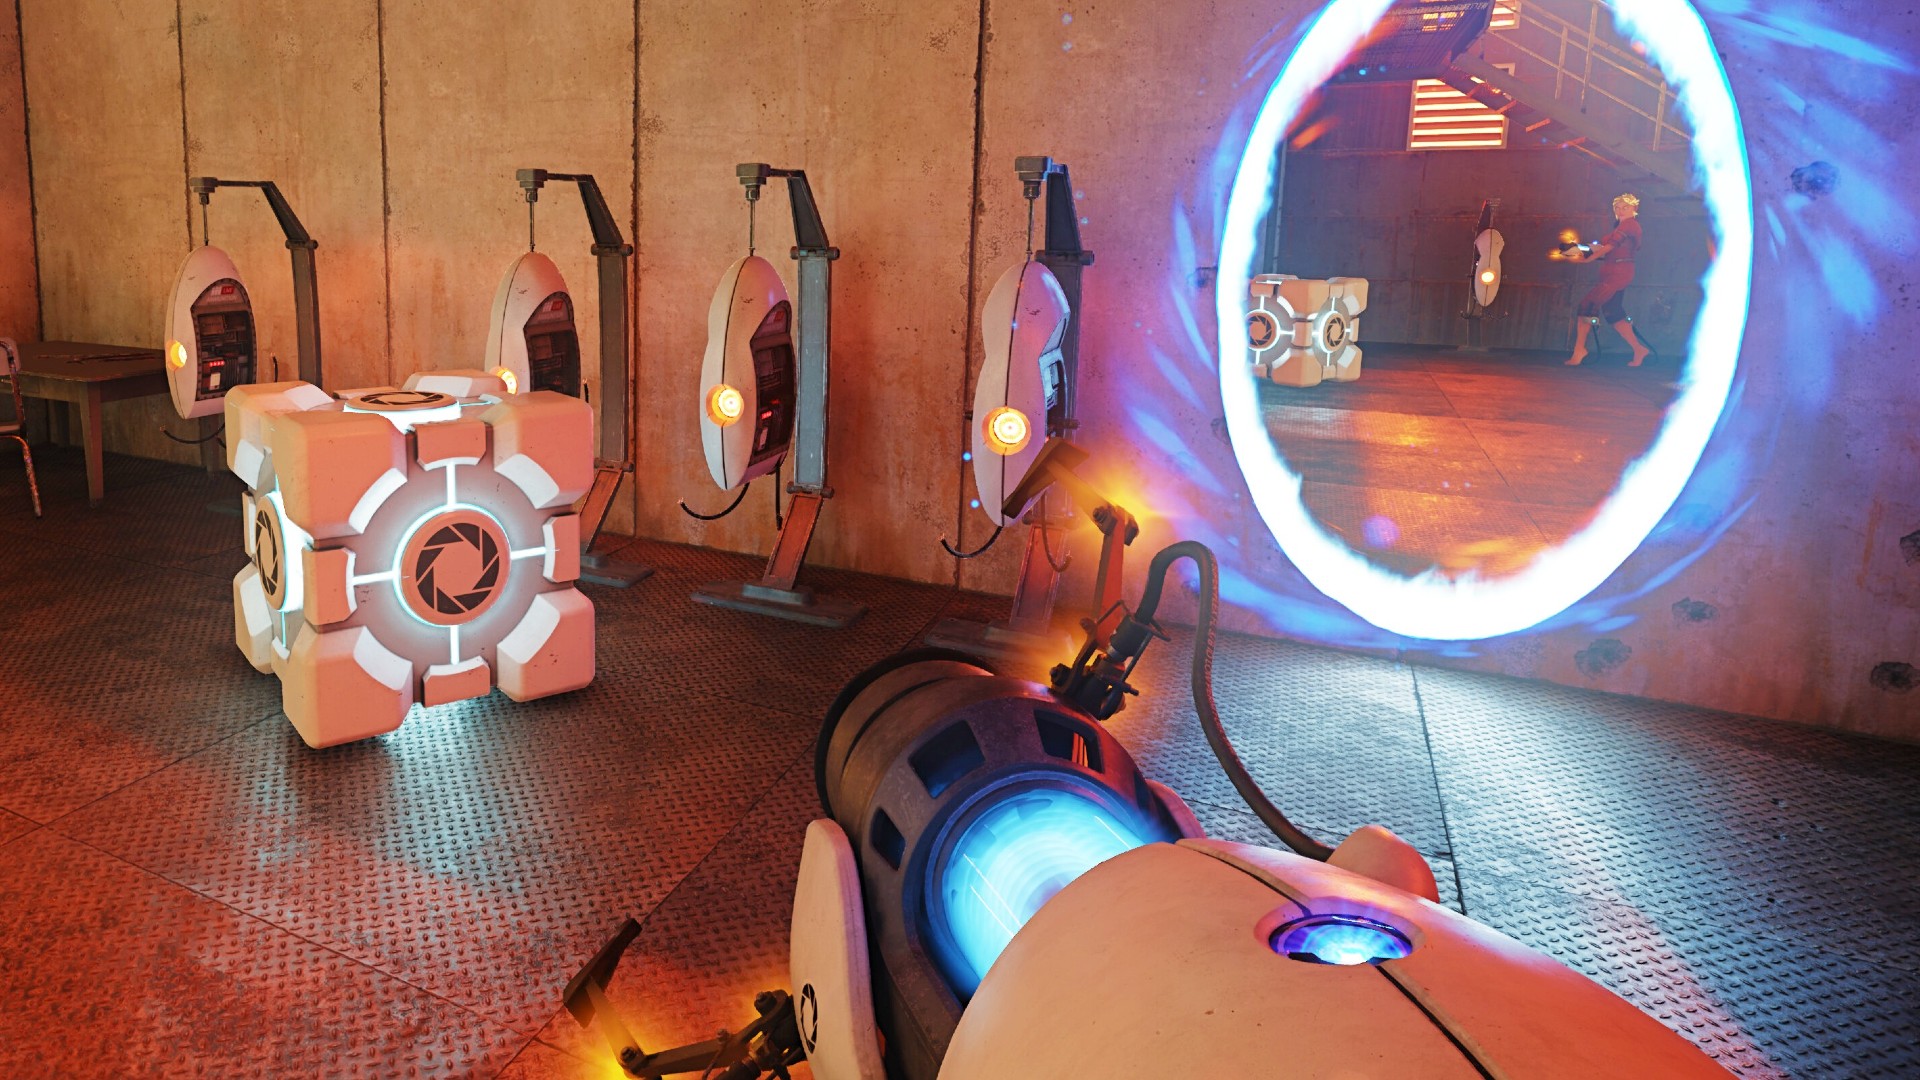 Portal prequel mod brings stunning RTX visuals to Valve's classic